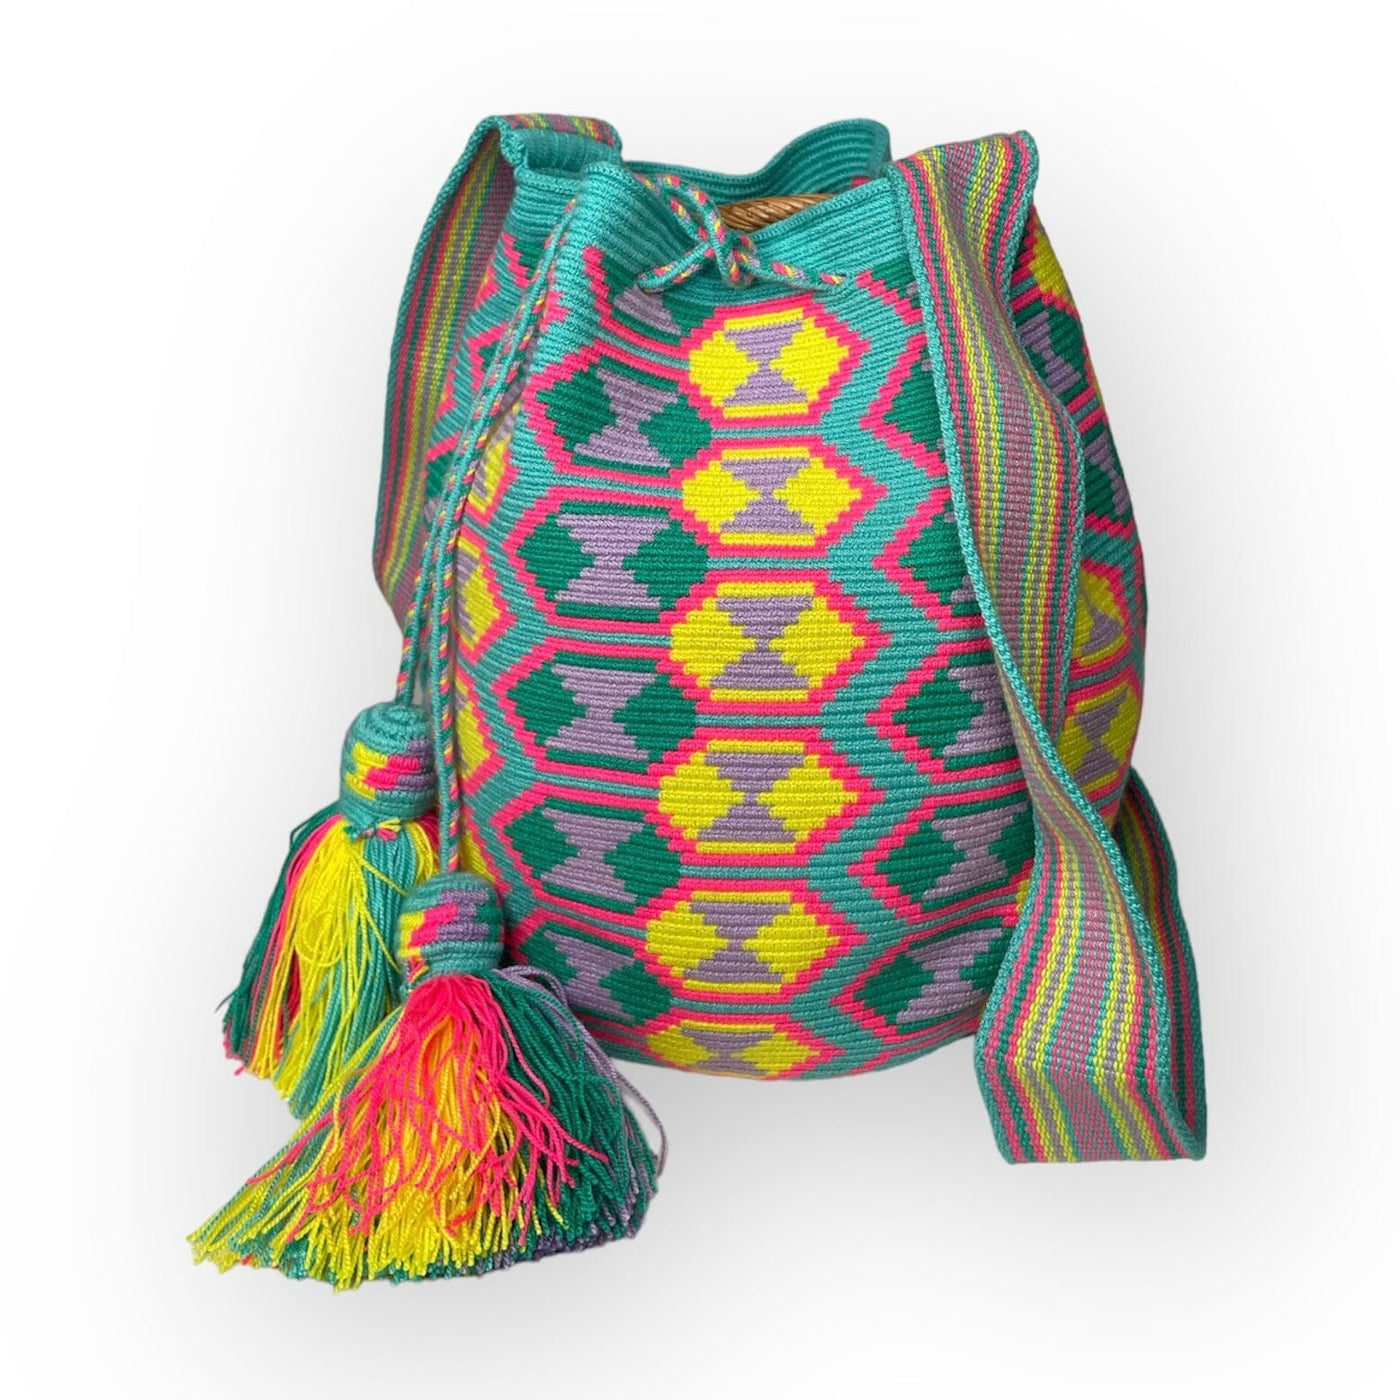 Turquoise Premium Summer Solstice Crochet Bags | Large Beach Bag | Colorful 4U